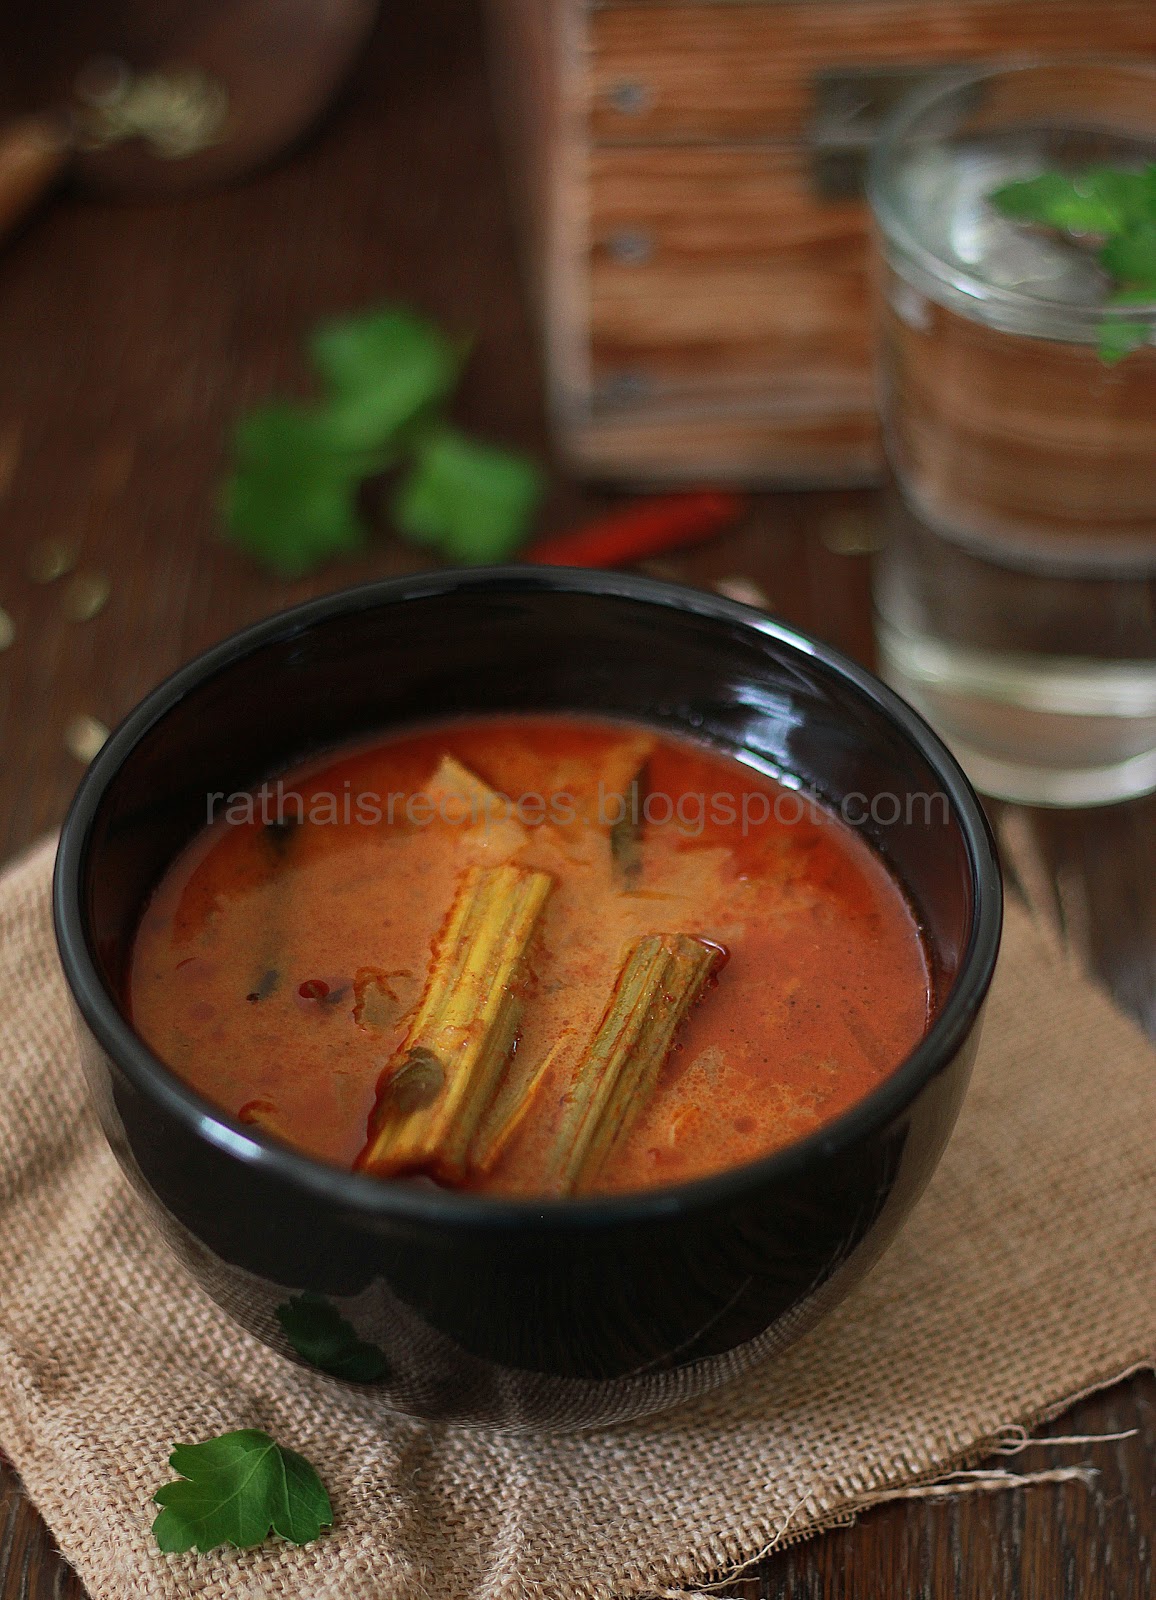 Rathai&amp;#39;s Recipes: Drumstick curry - Murungai kai curry